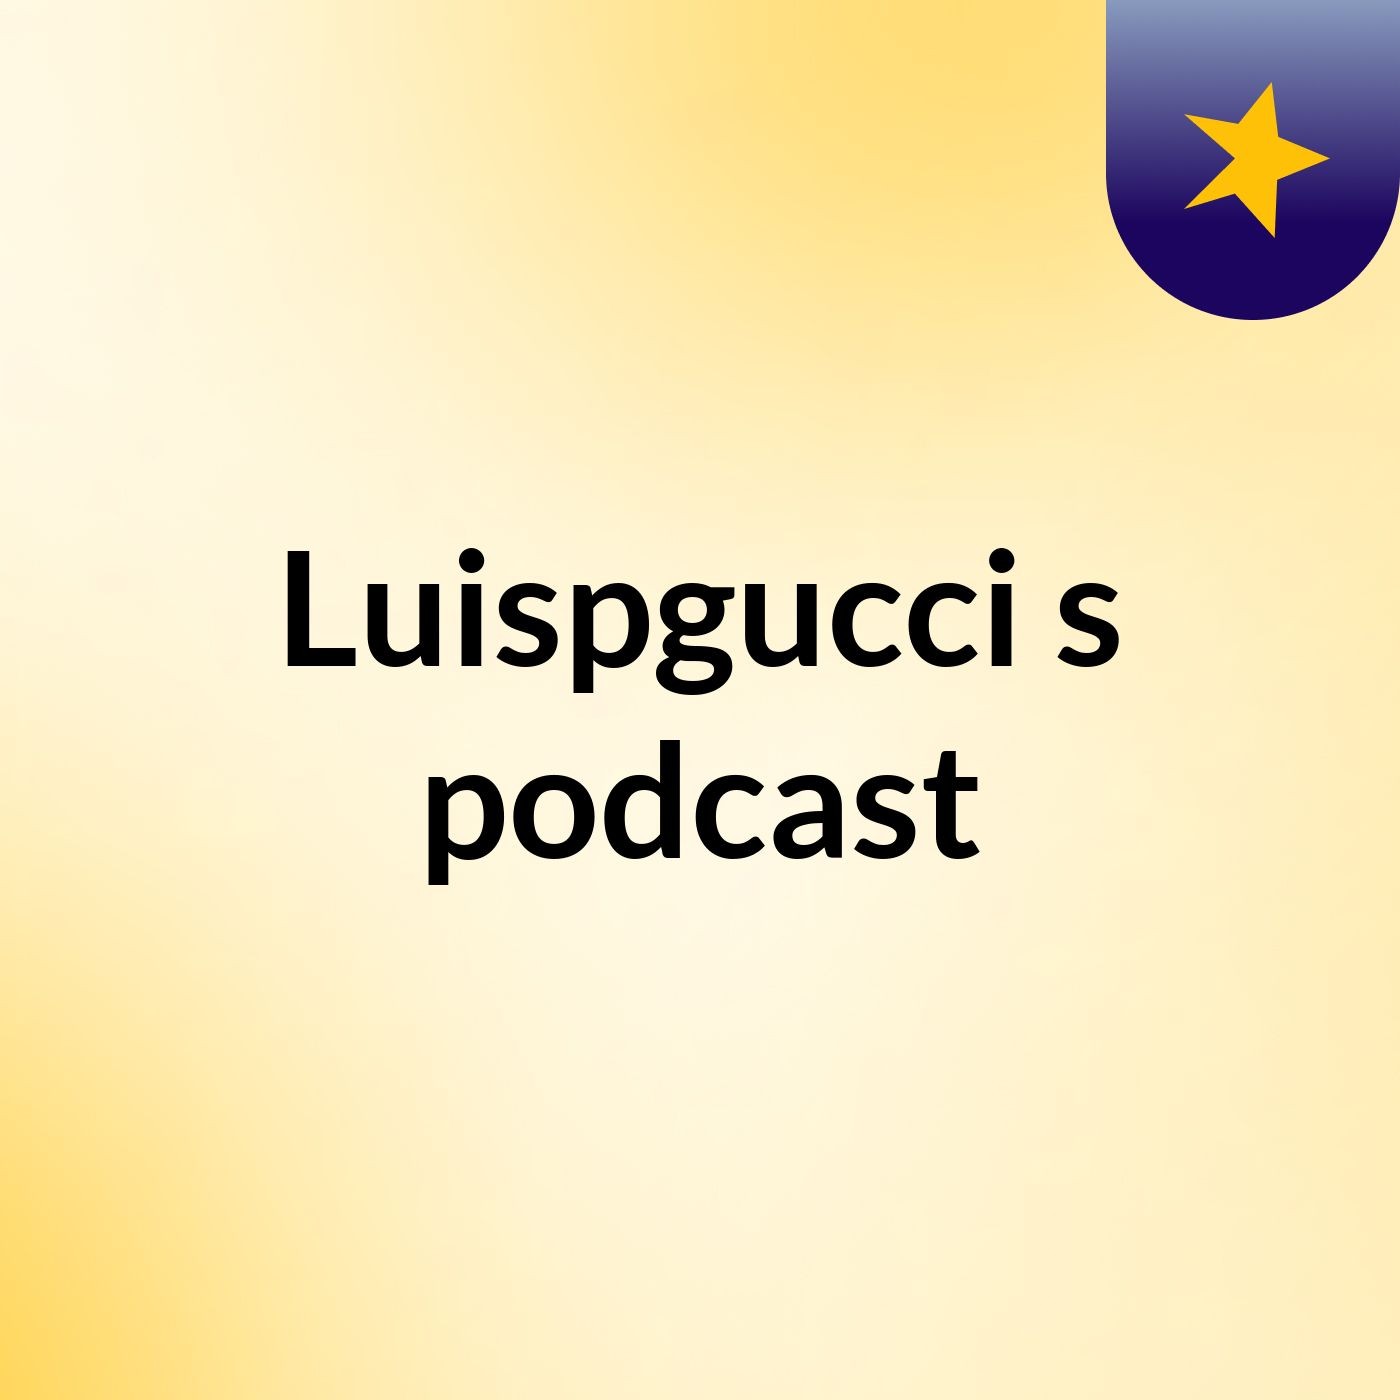 Episode 4 - Luispgucci's podcast